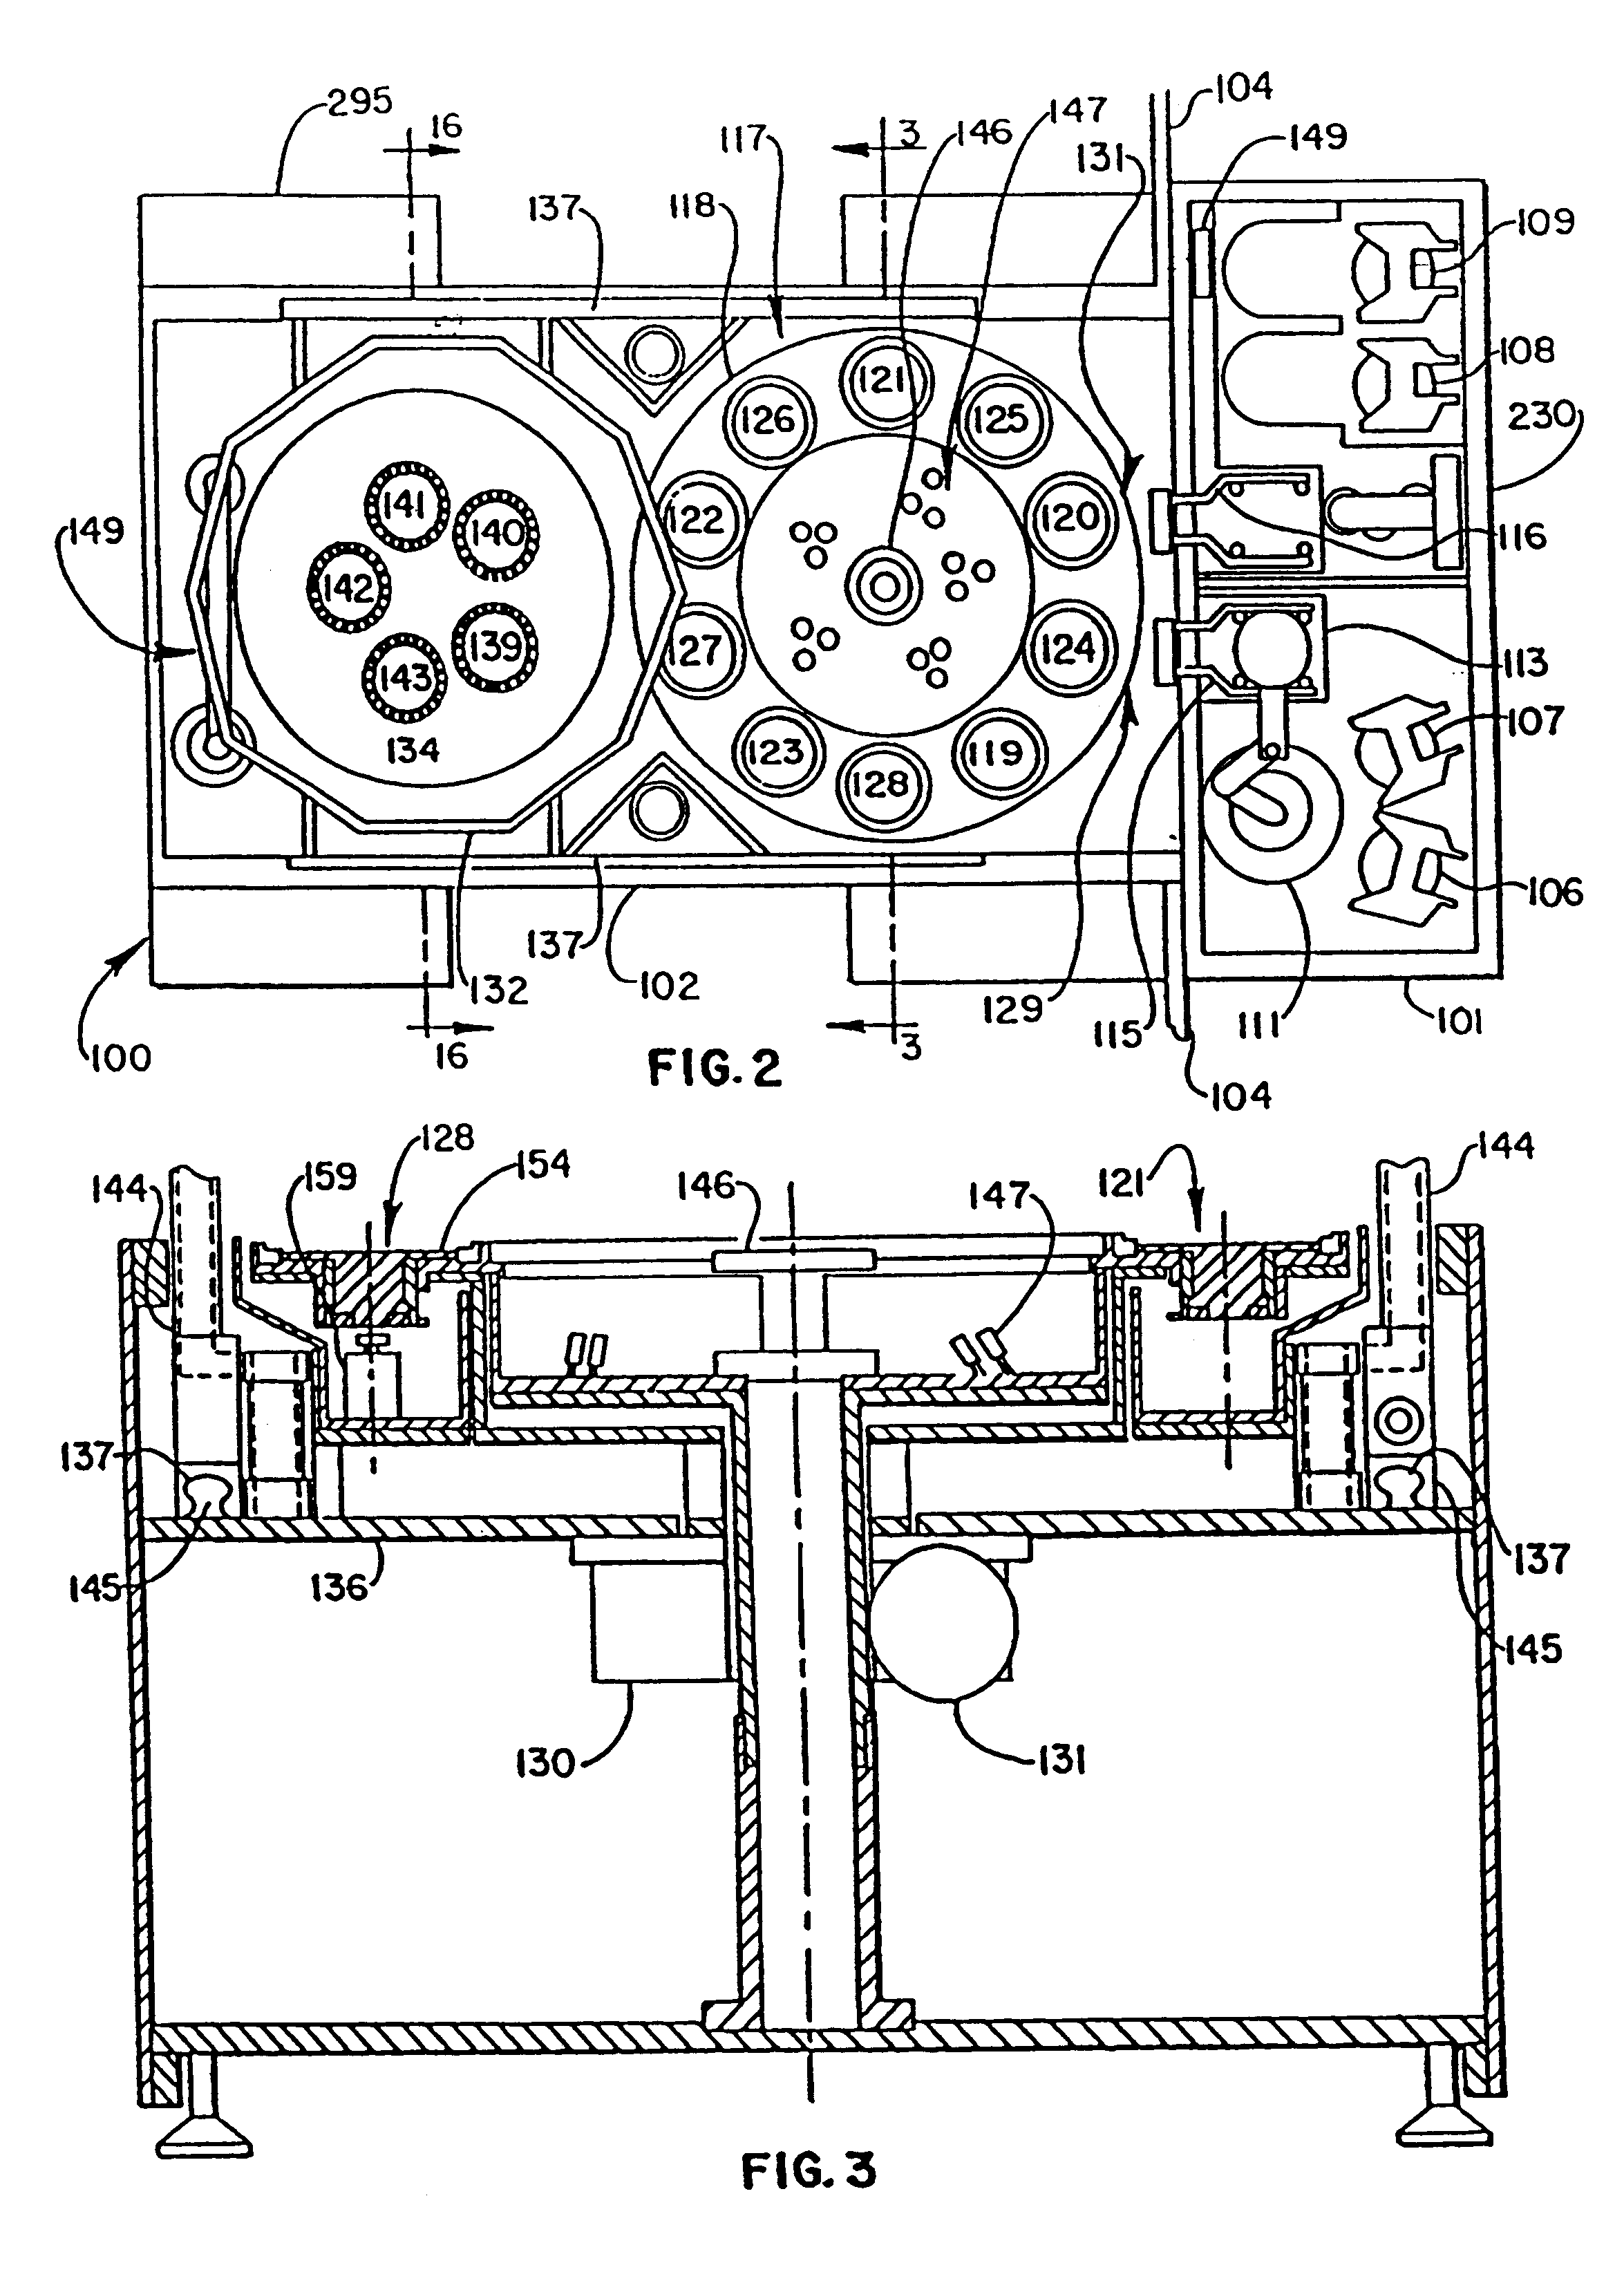 Wafer polishing method and apparatus